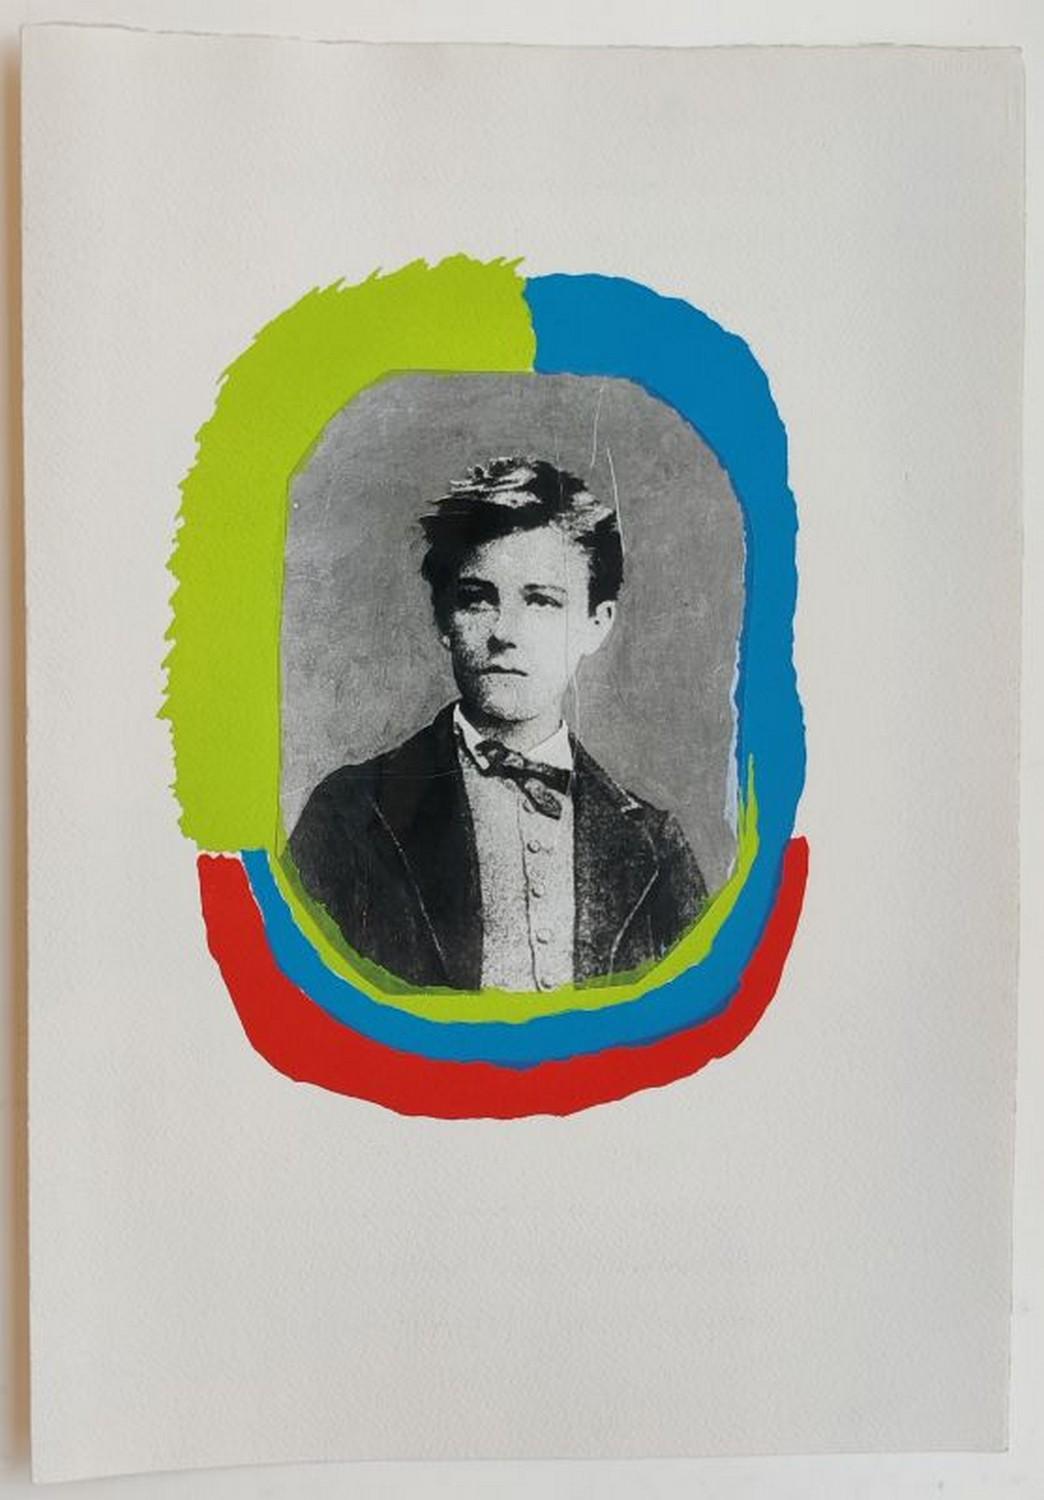 Les illuminations de Rimbaud  - Print by Sonia Delaunay